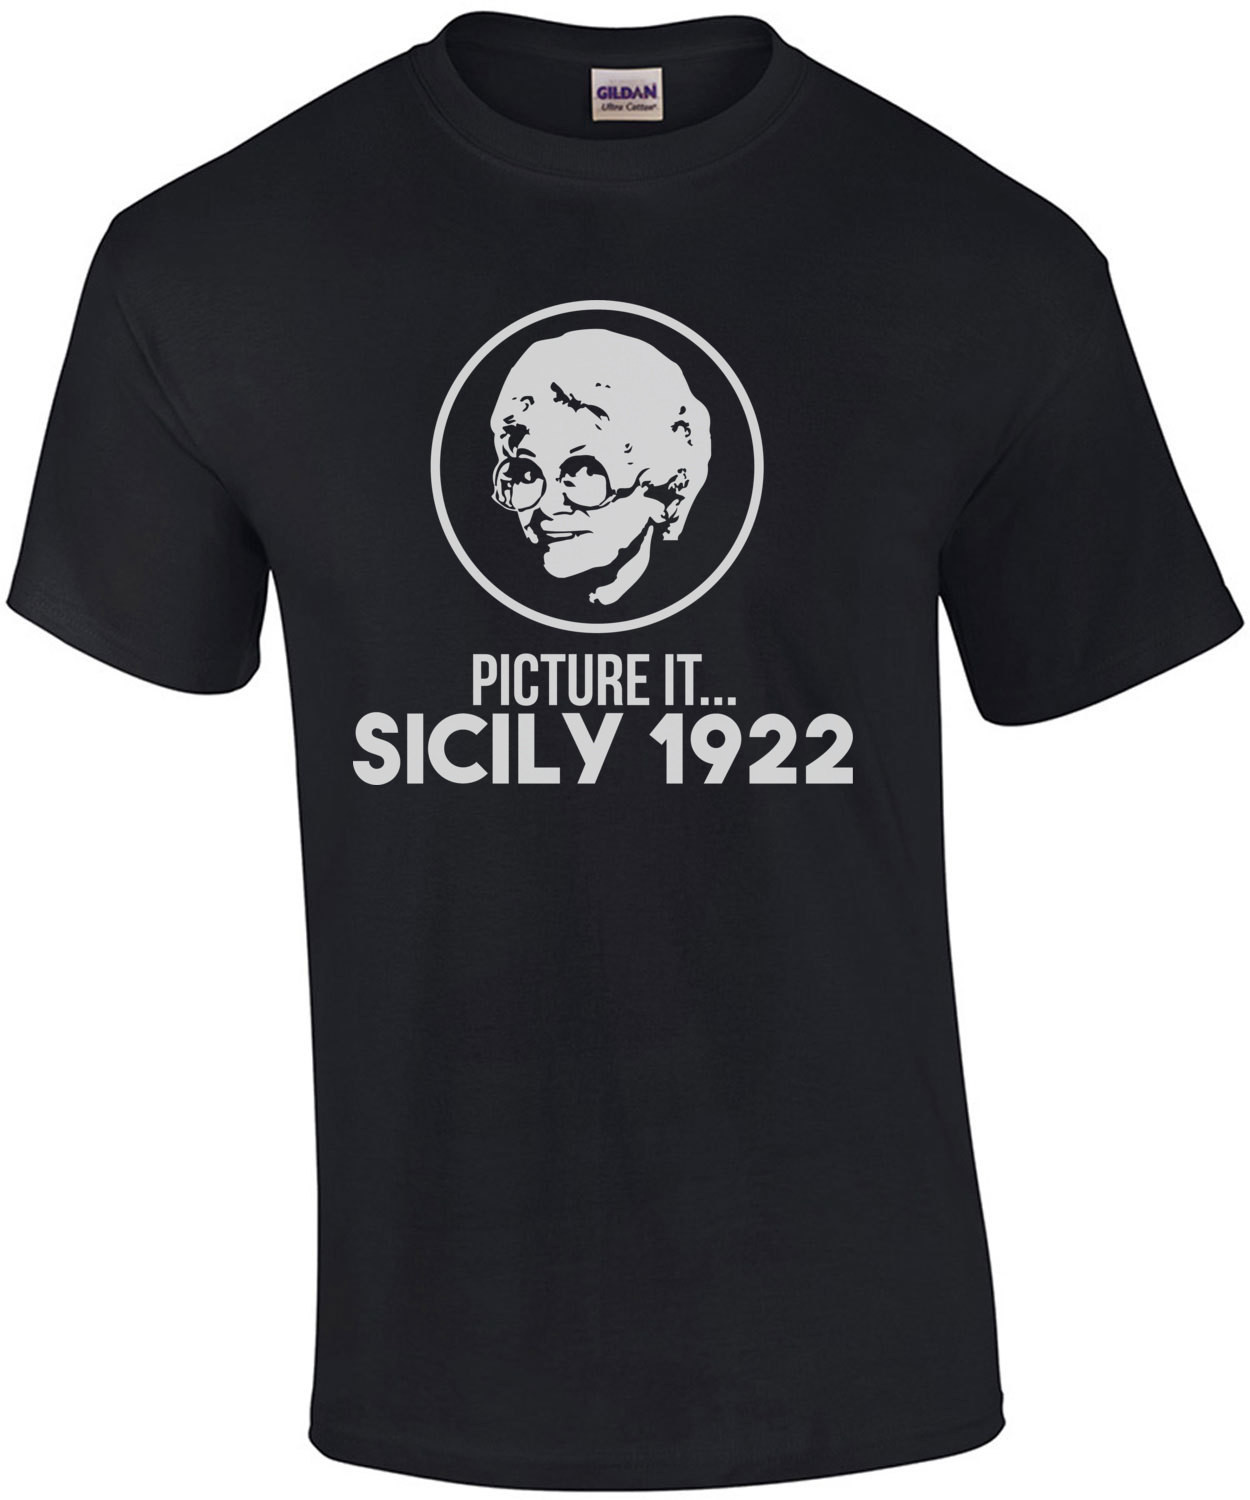 Picture It... Sicily 1922 Golden Girls Dorothy - T-Shirt